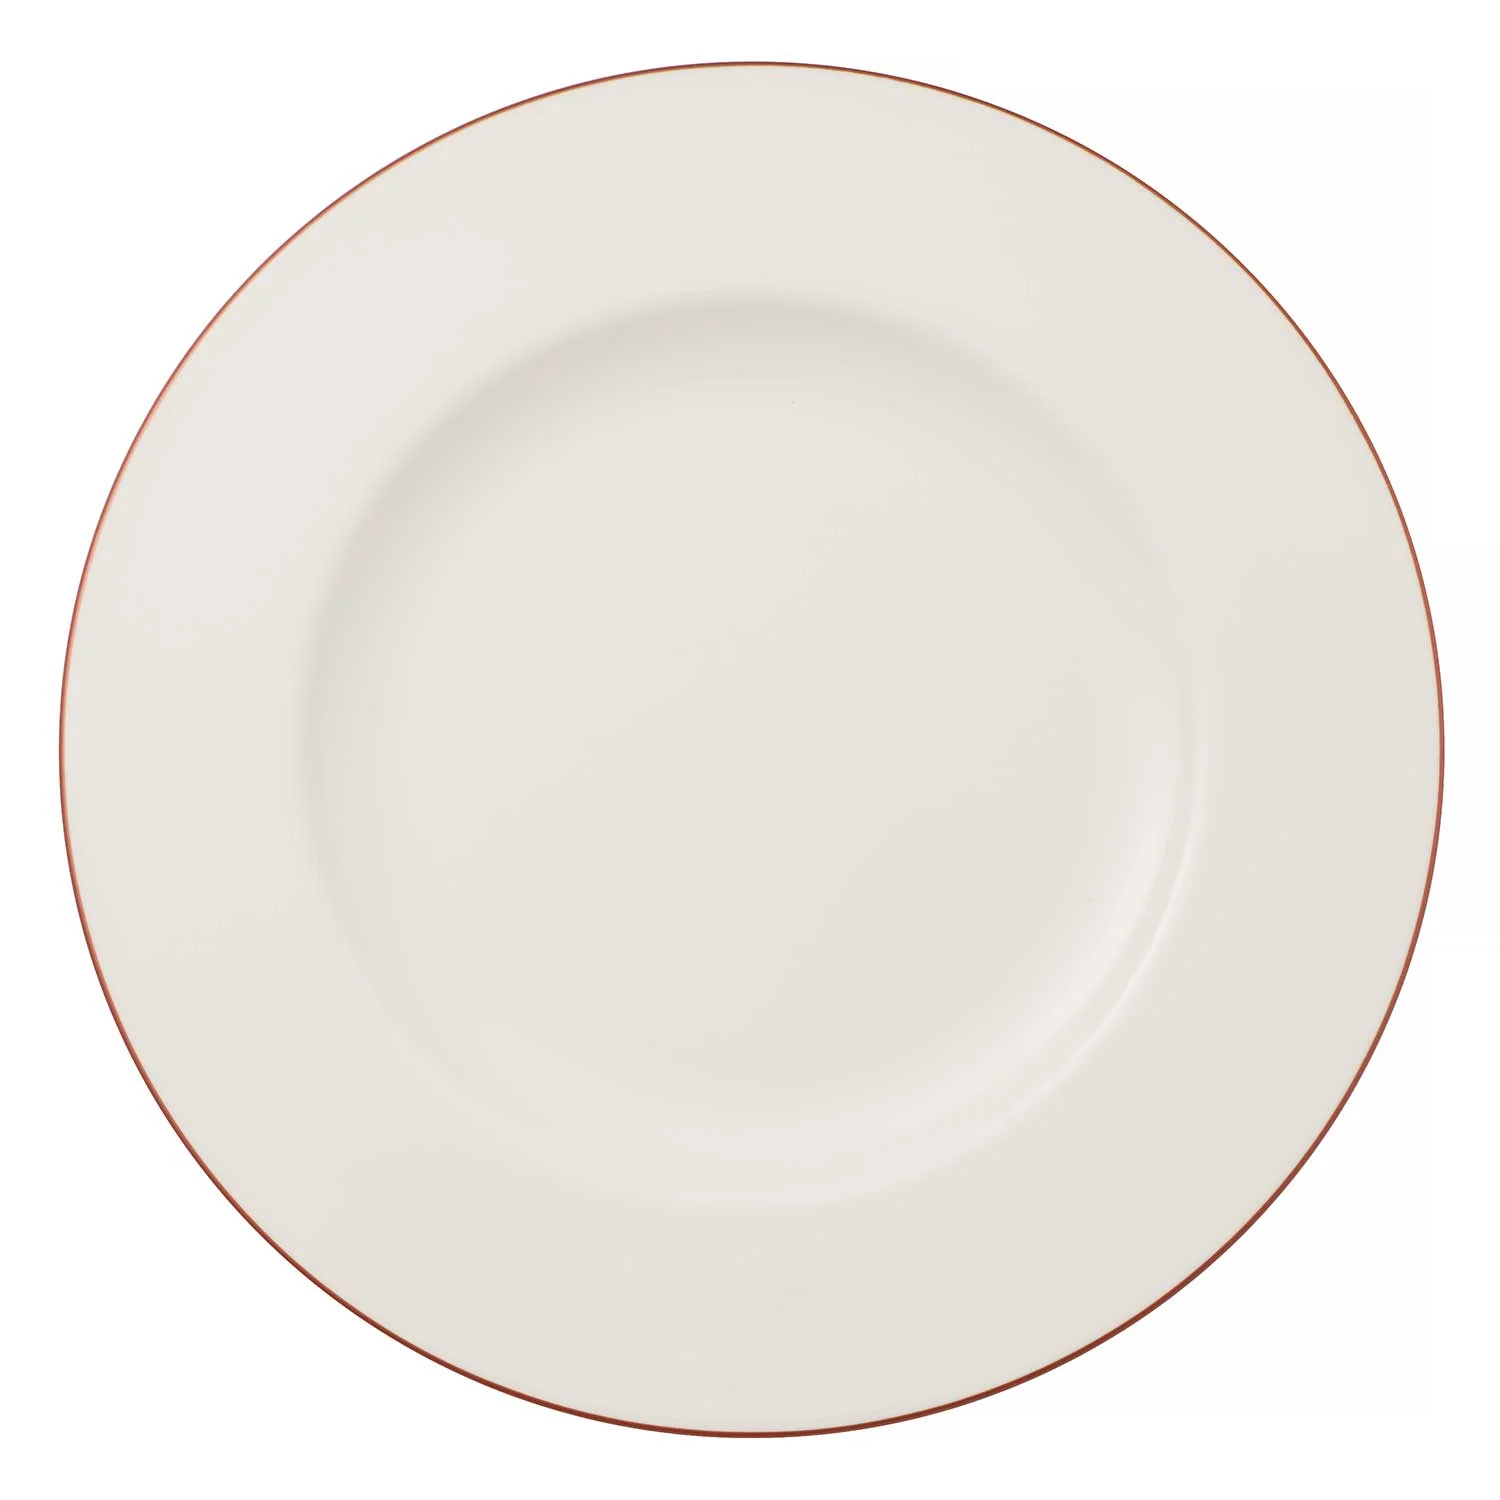 Anmut Rosewood Плоская тарелка 28 см